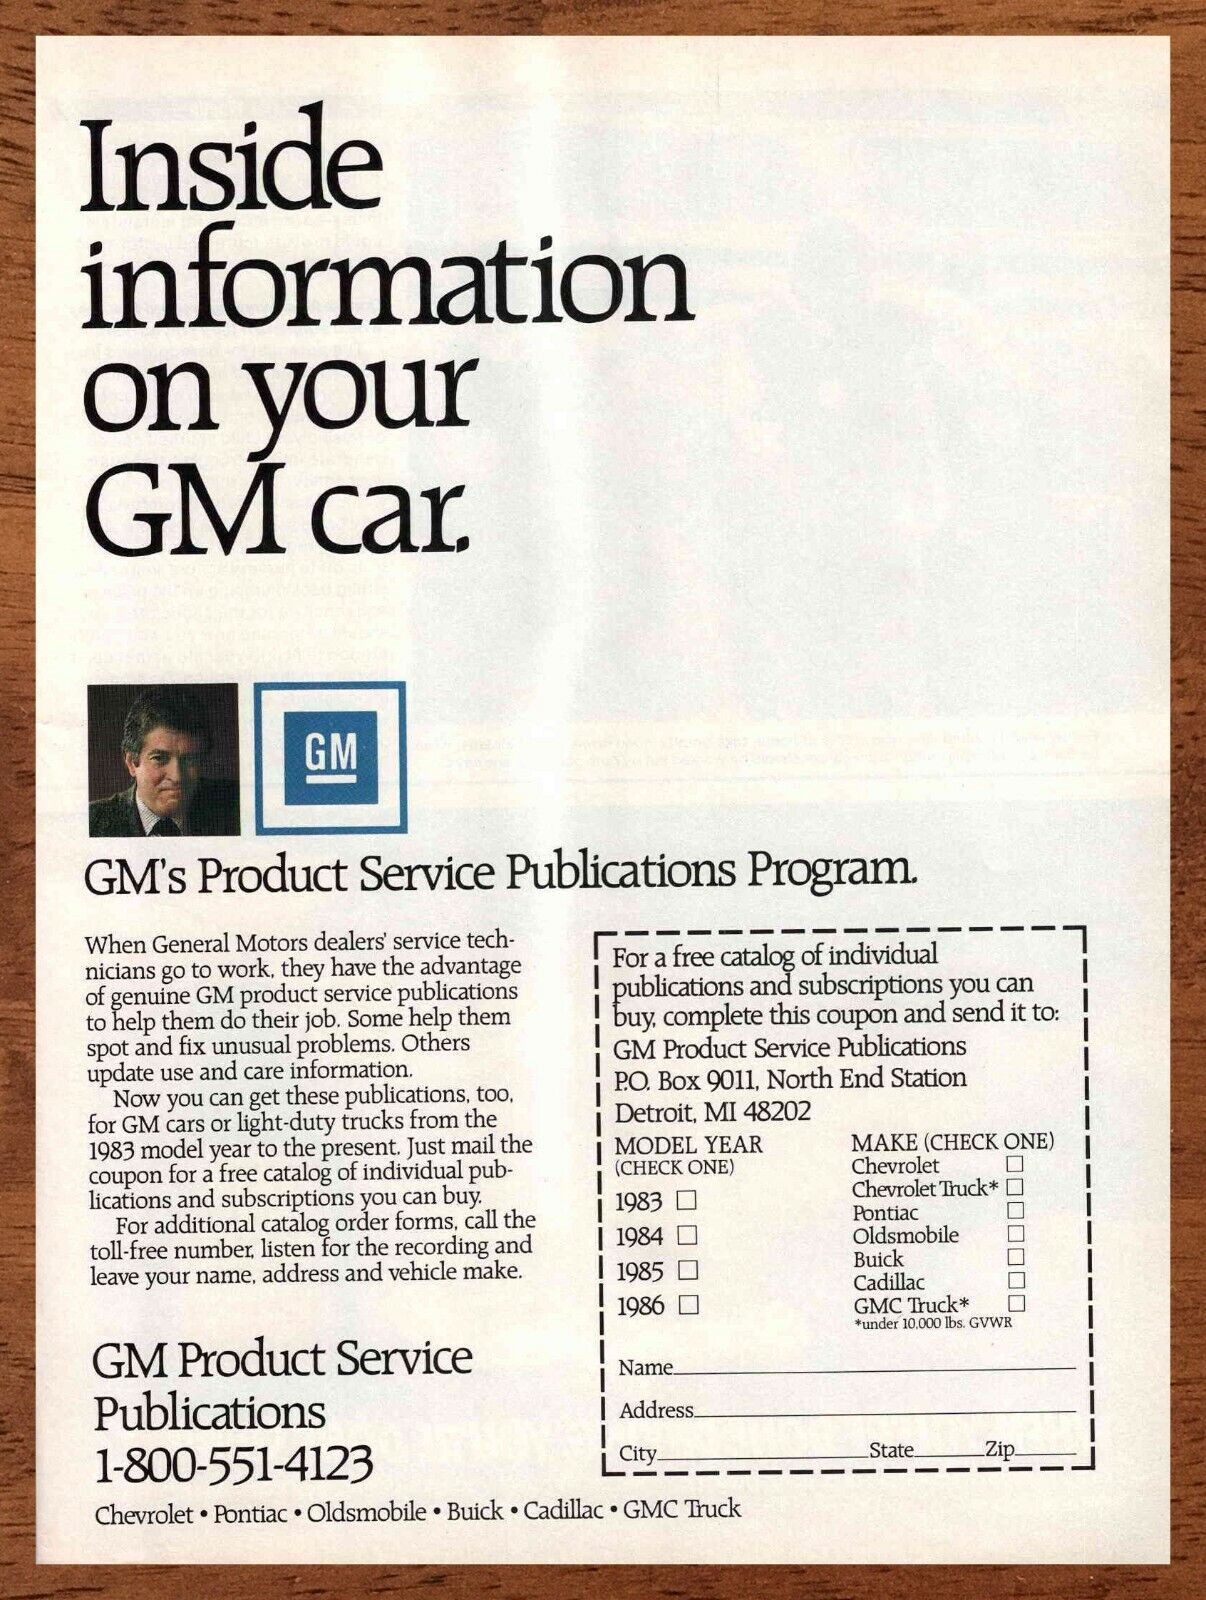 1986 GM Product Service Vintage Print Ad/Poster Retro 80s Car Bar Art Décor